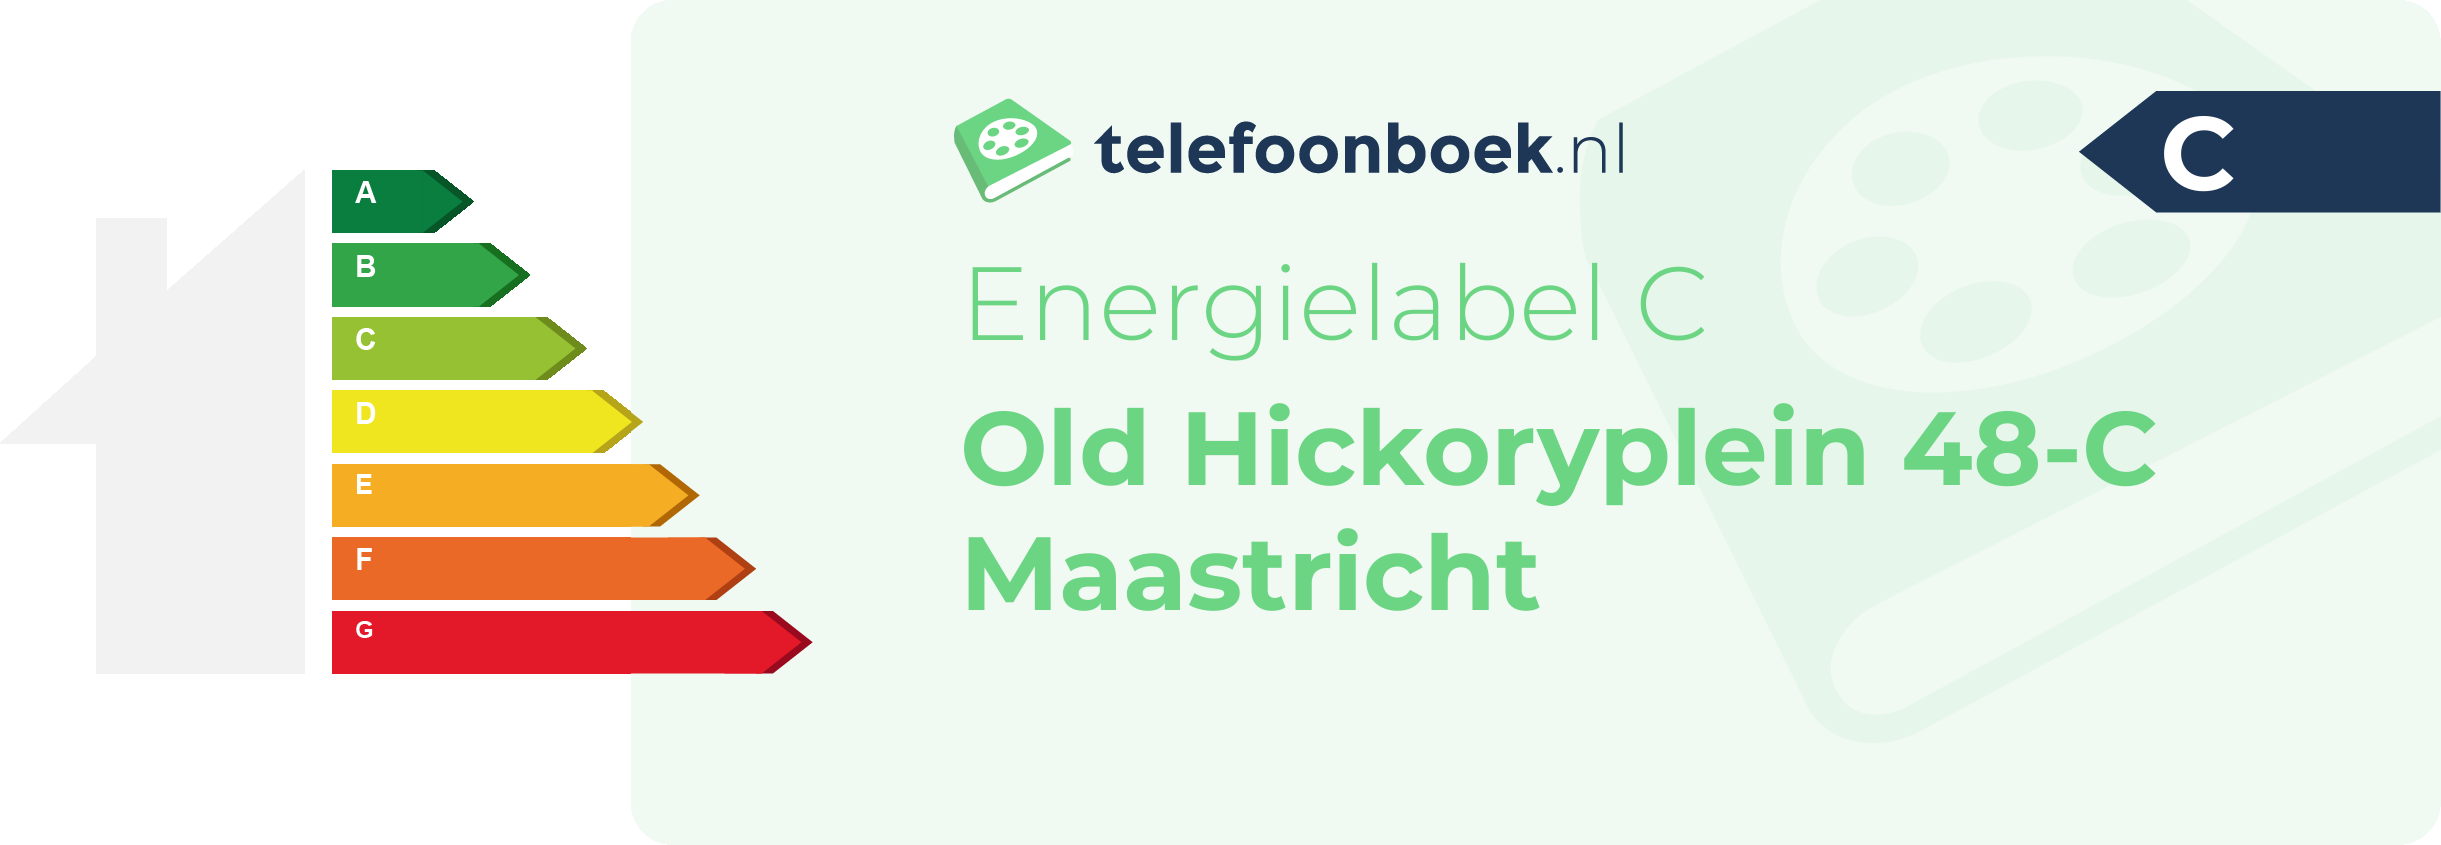 Energielabel Old Hickoryplein 48-C Maastricht